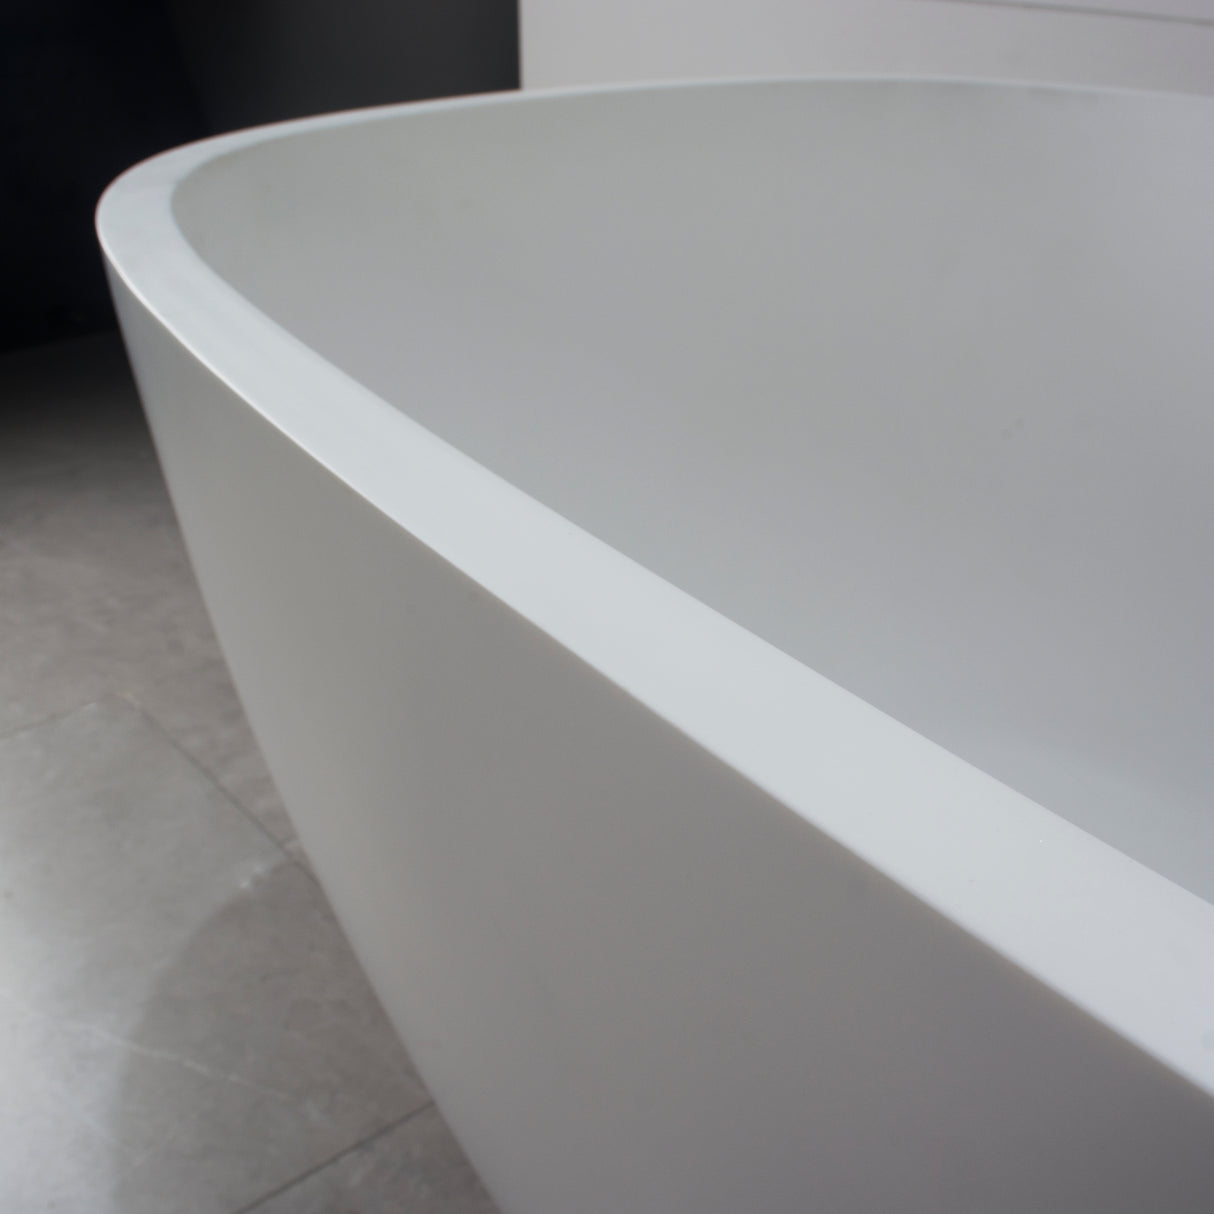 Solid Surface Freestanding Bathtub